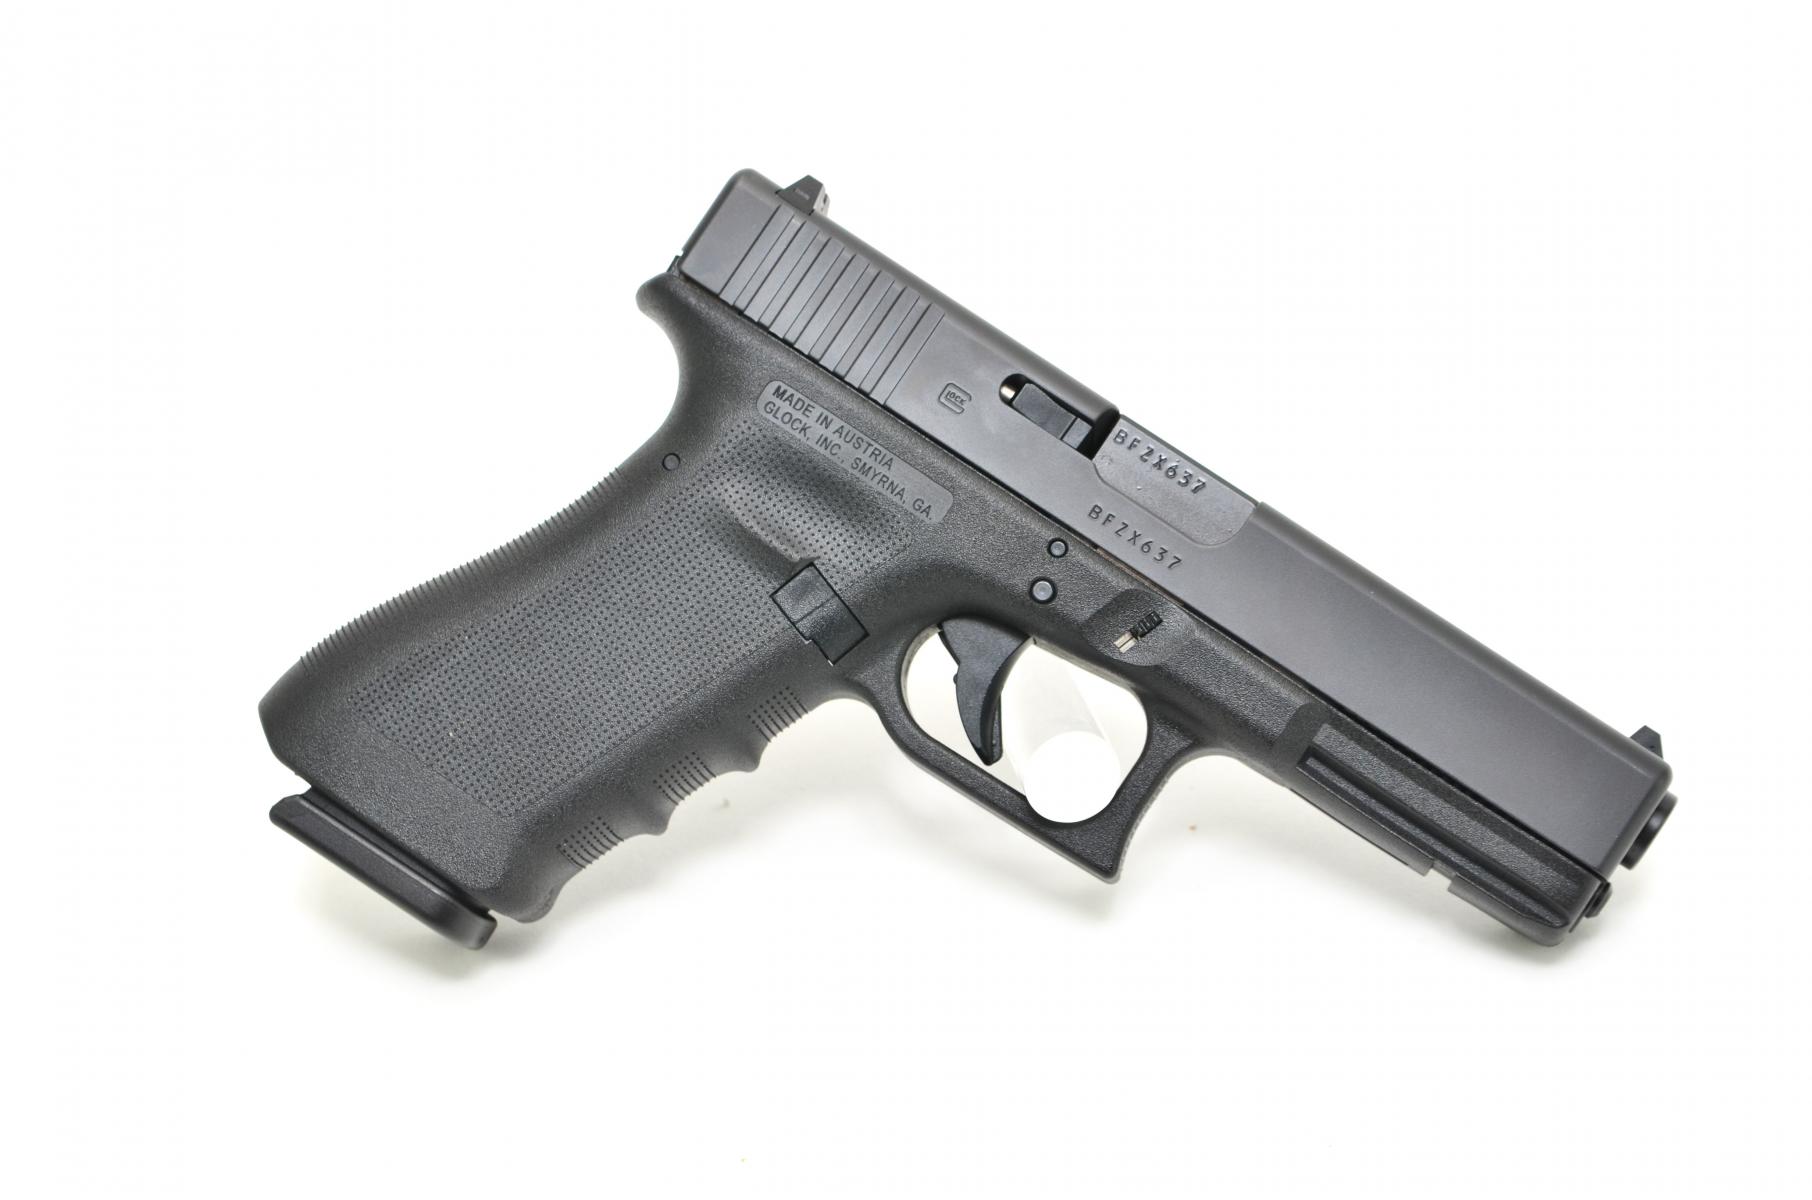 Free sale outdoor repelling pistol, glock 17 brown blanks for